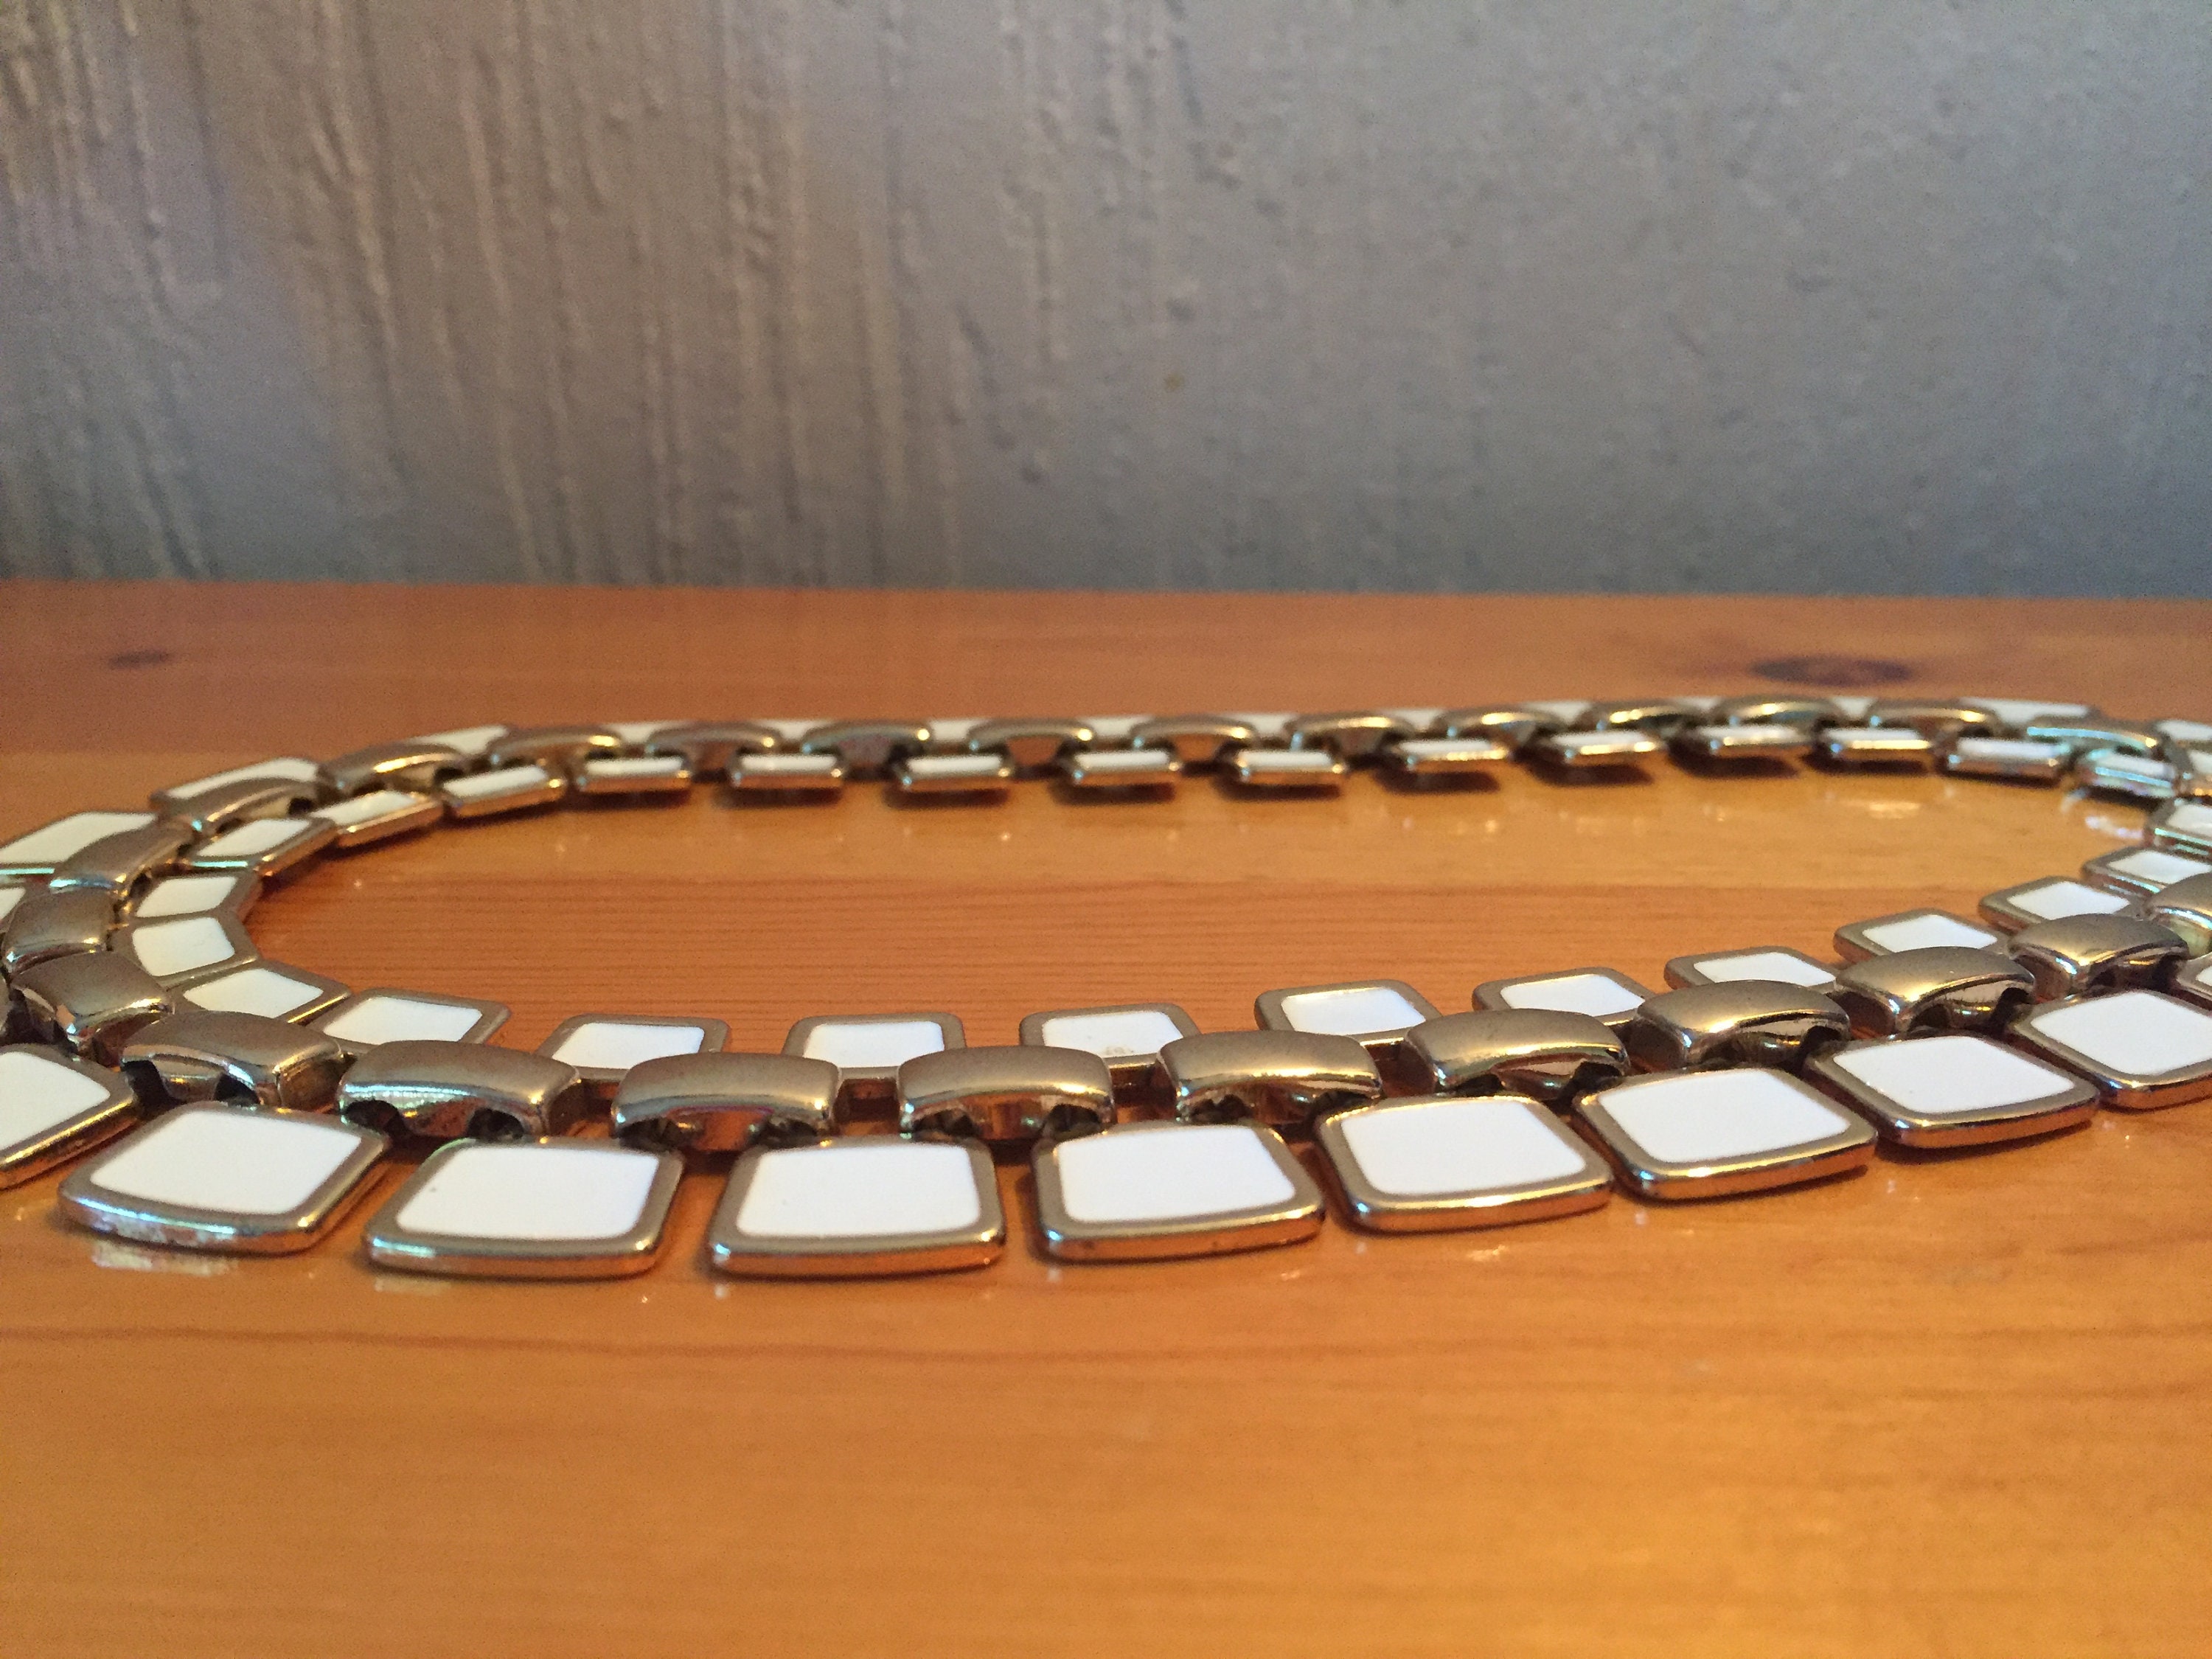 Lovisa Chain-link Necklace Vintage Choker Necklace 